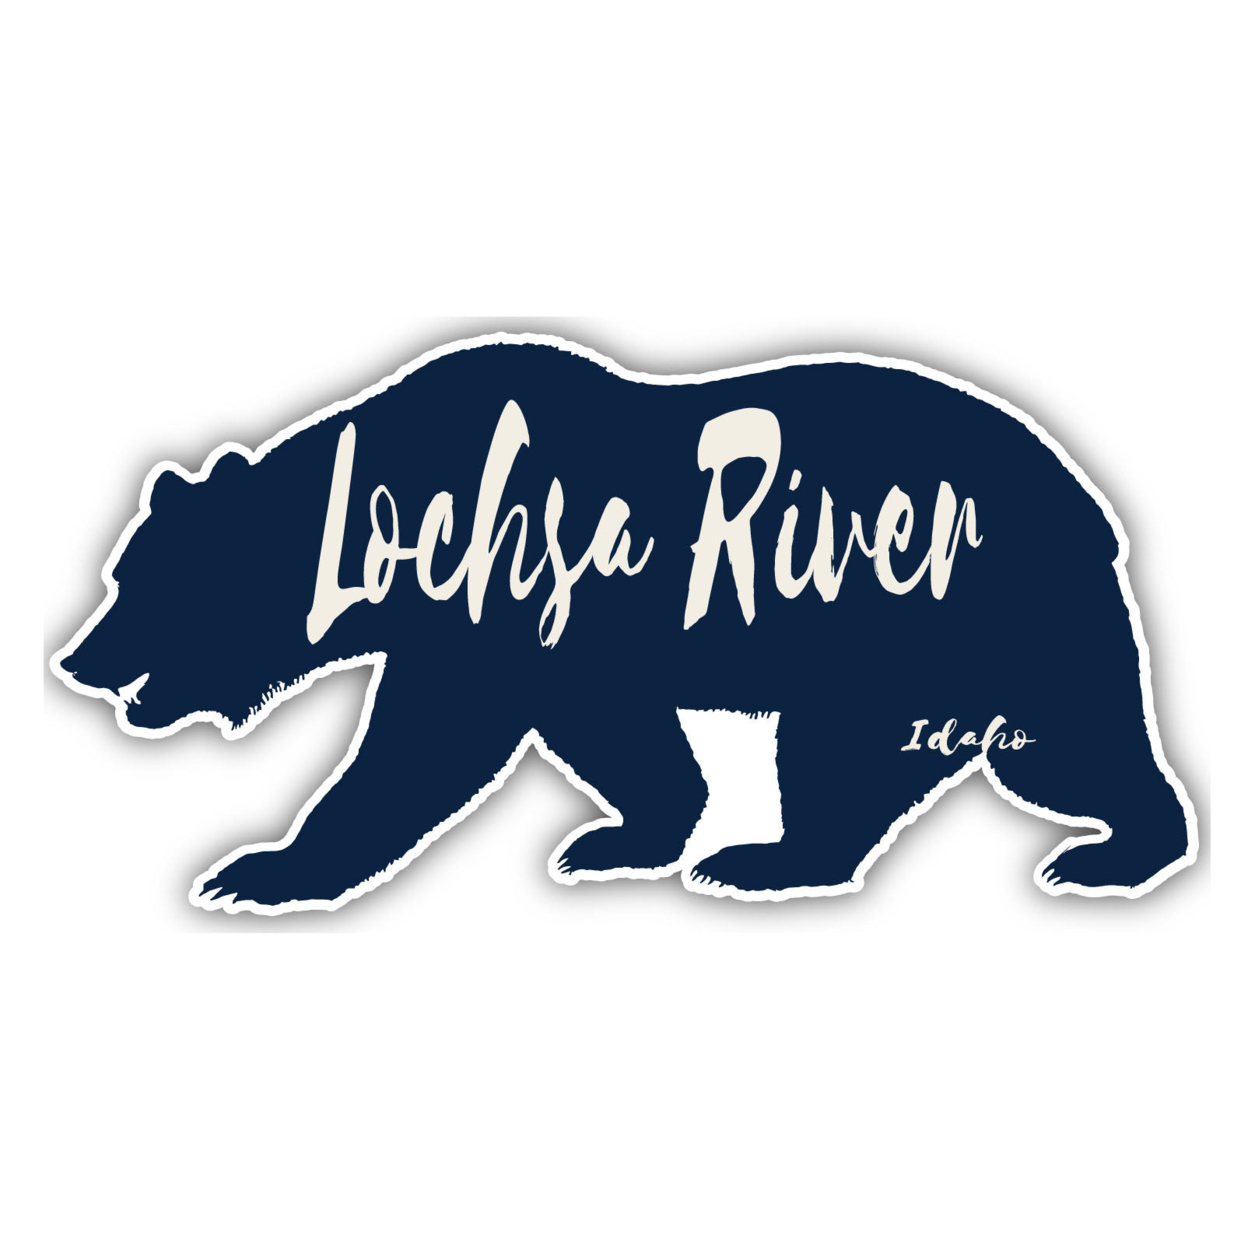 Lochsa River Idaho Souvenir Decorative Stickers (Choose Theme And Size) - 2-Inch, Bear